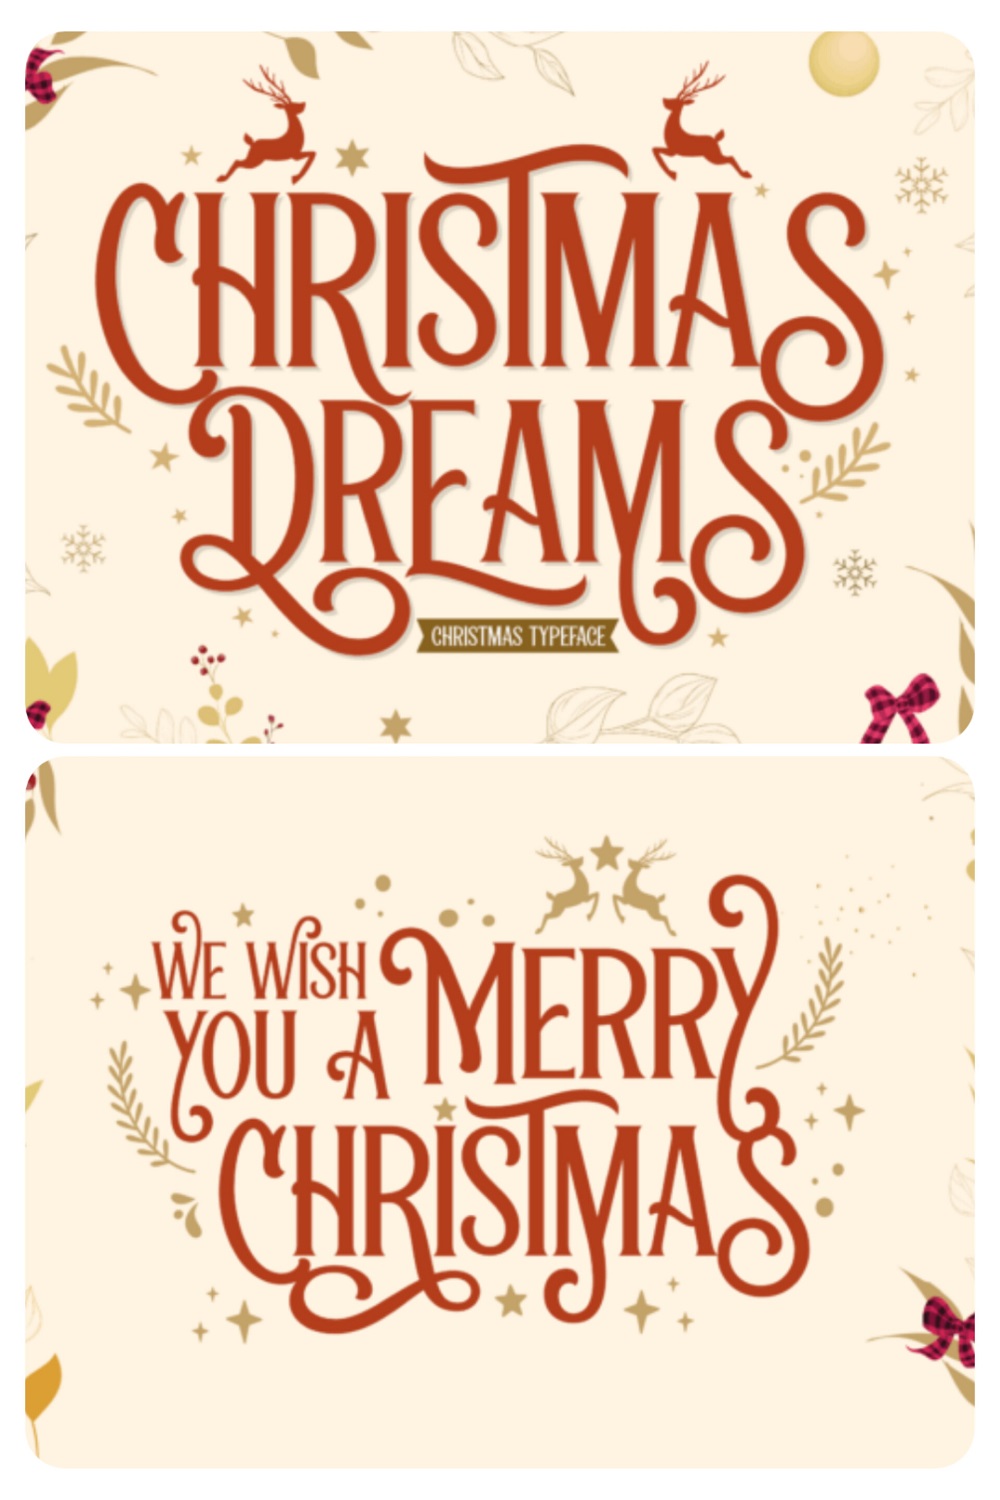 Christmas Dreams Font pinterest preview image.